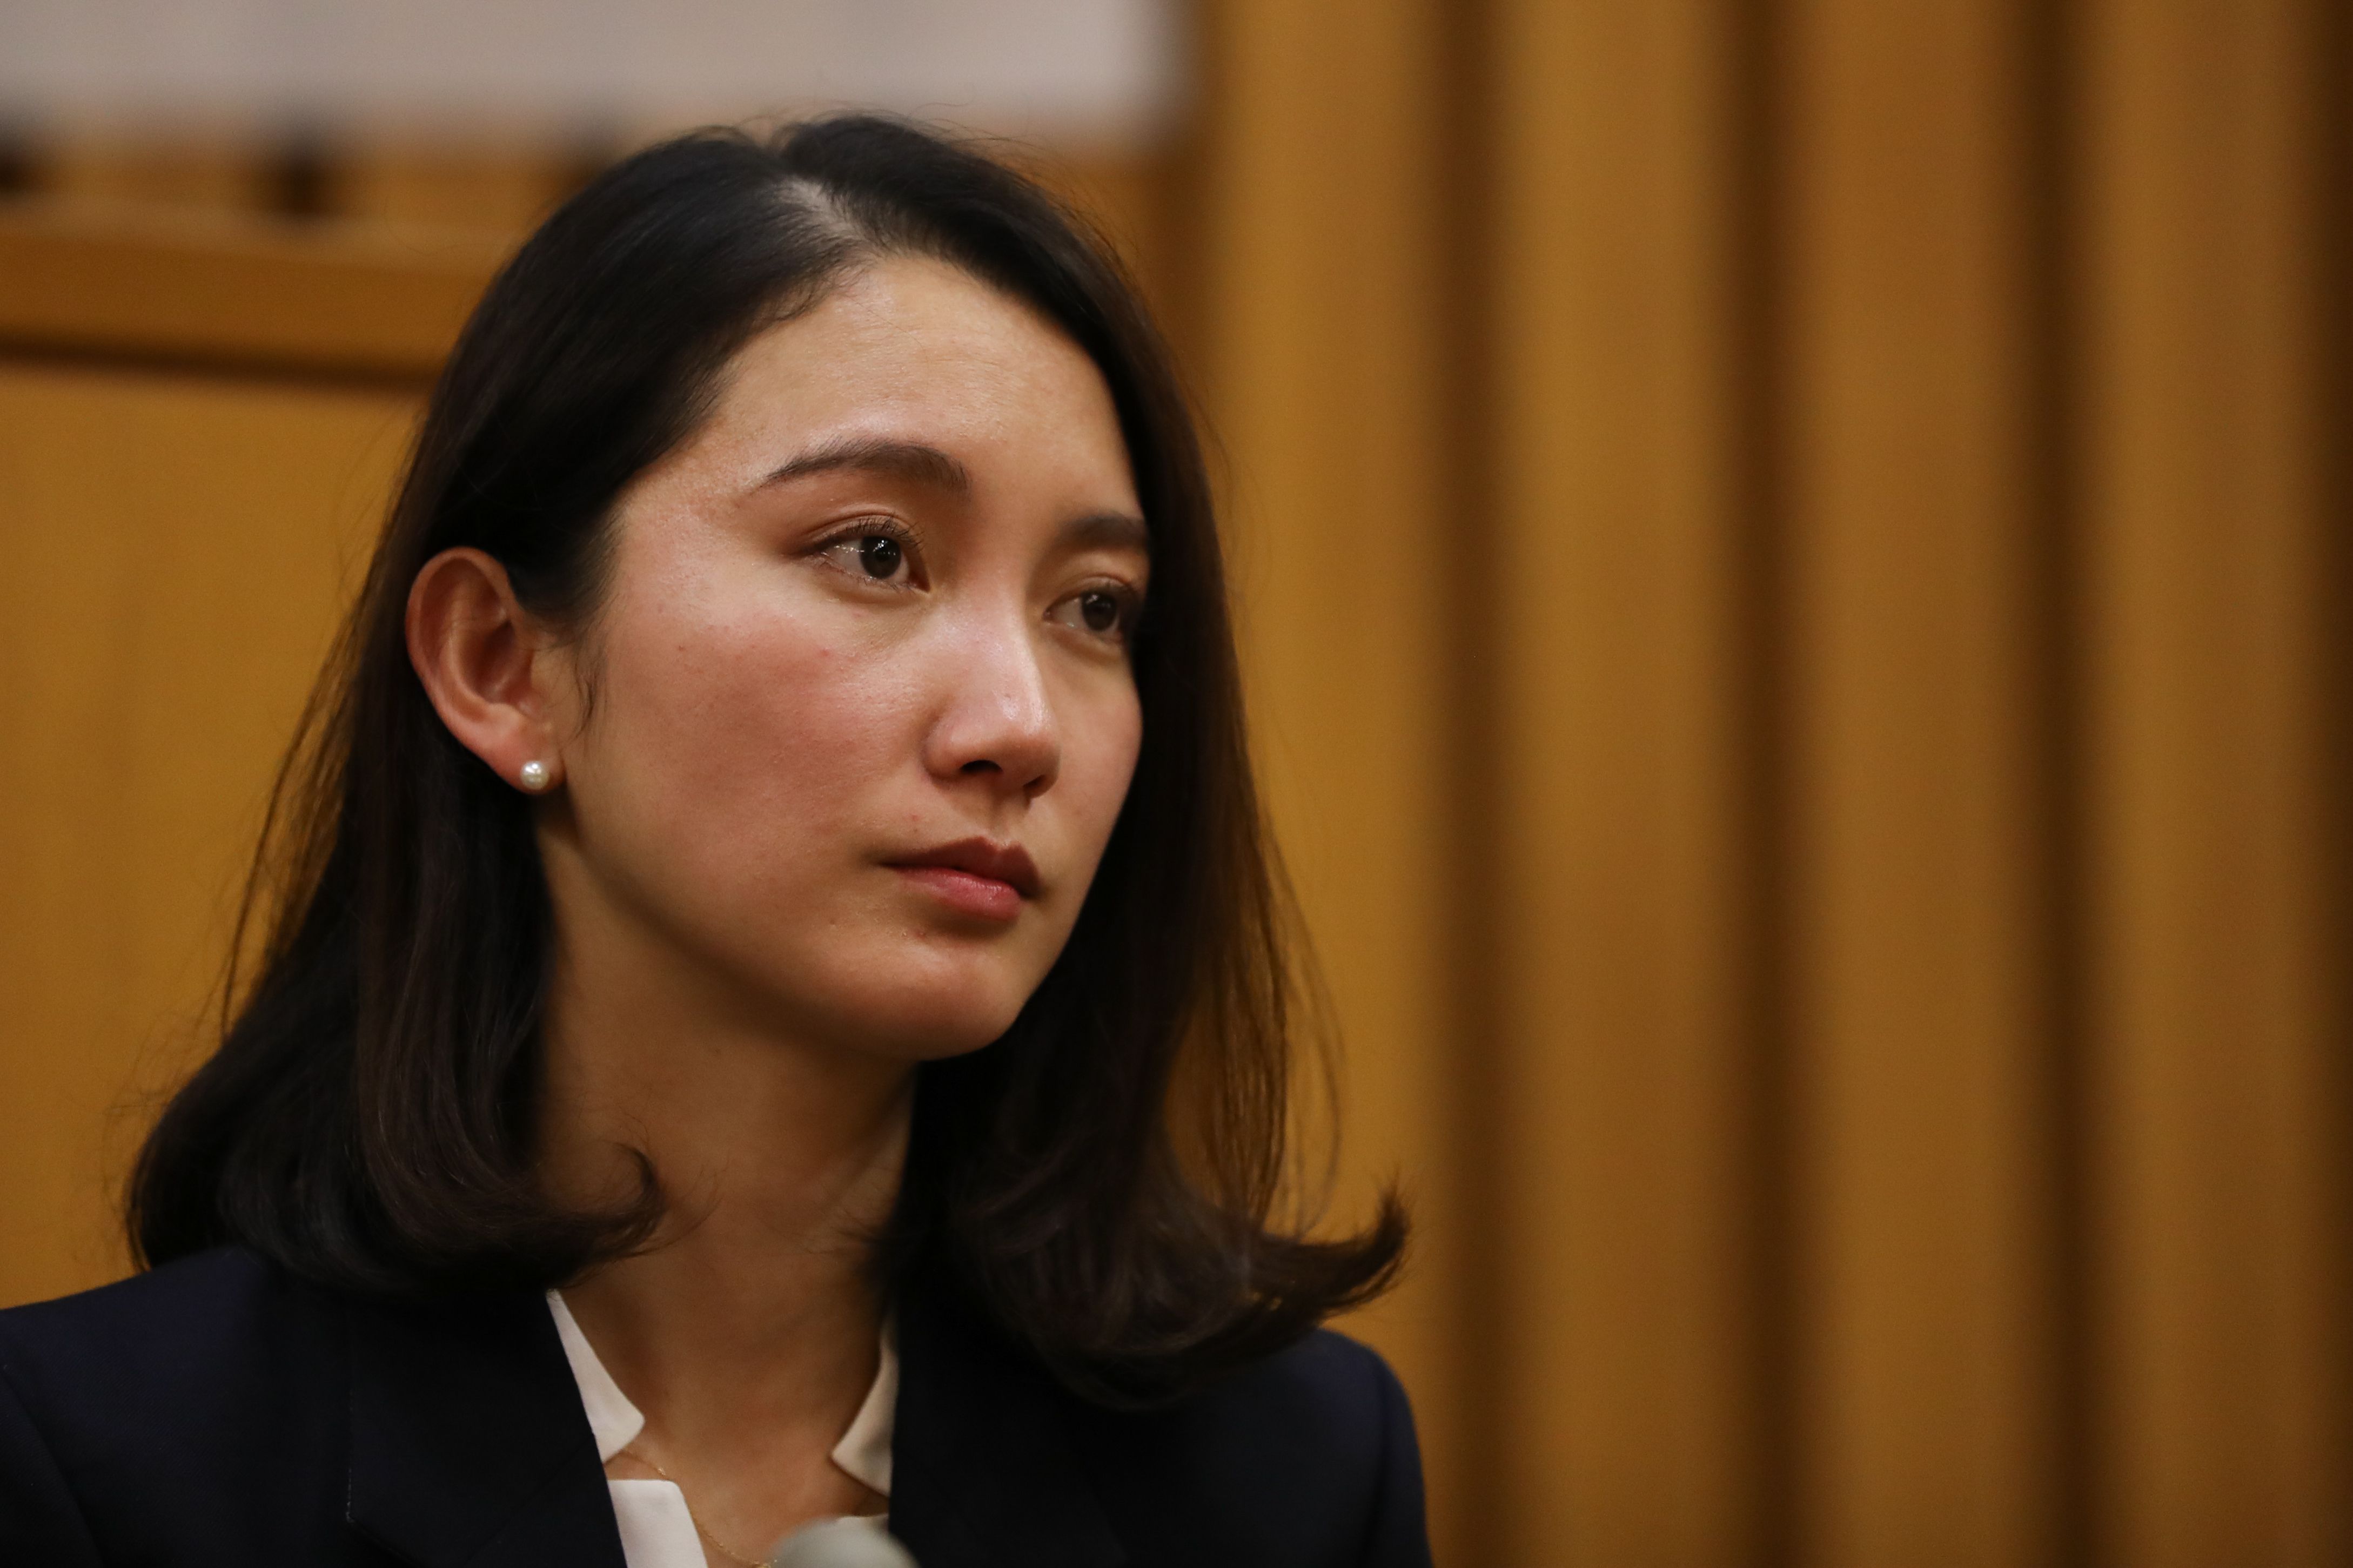 Sex Porn Video Rep Jbrdsti - Shiori Ito won civil case against her alleged rapist. But Japan's rape laws  need overhaul, campaigners say | CNN